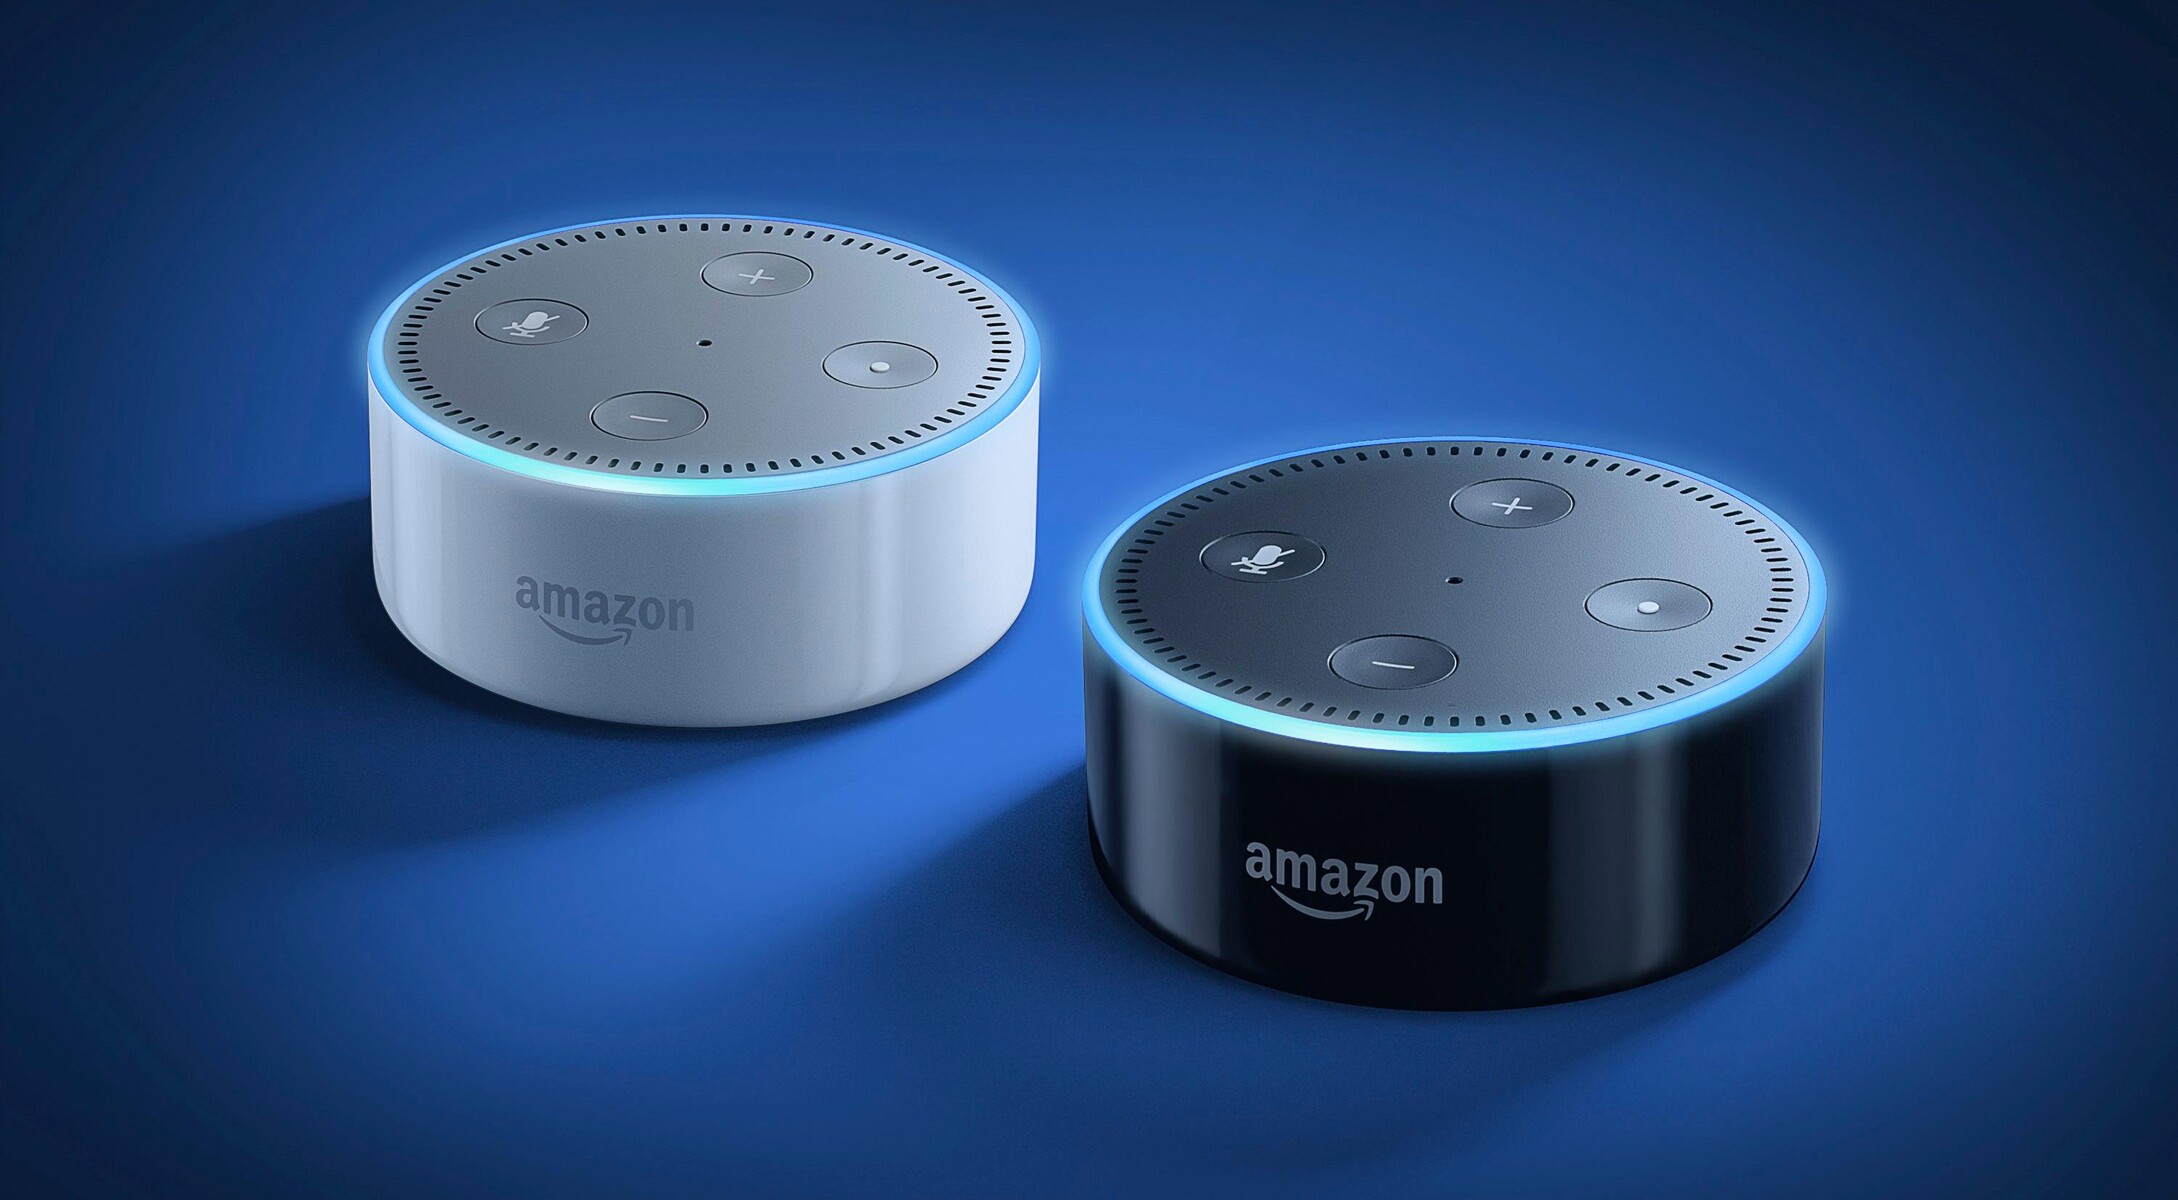 amazon-echo-dot-2nd-generation-smart-speaker-with-alexa-how-it-works